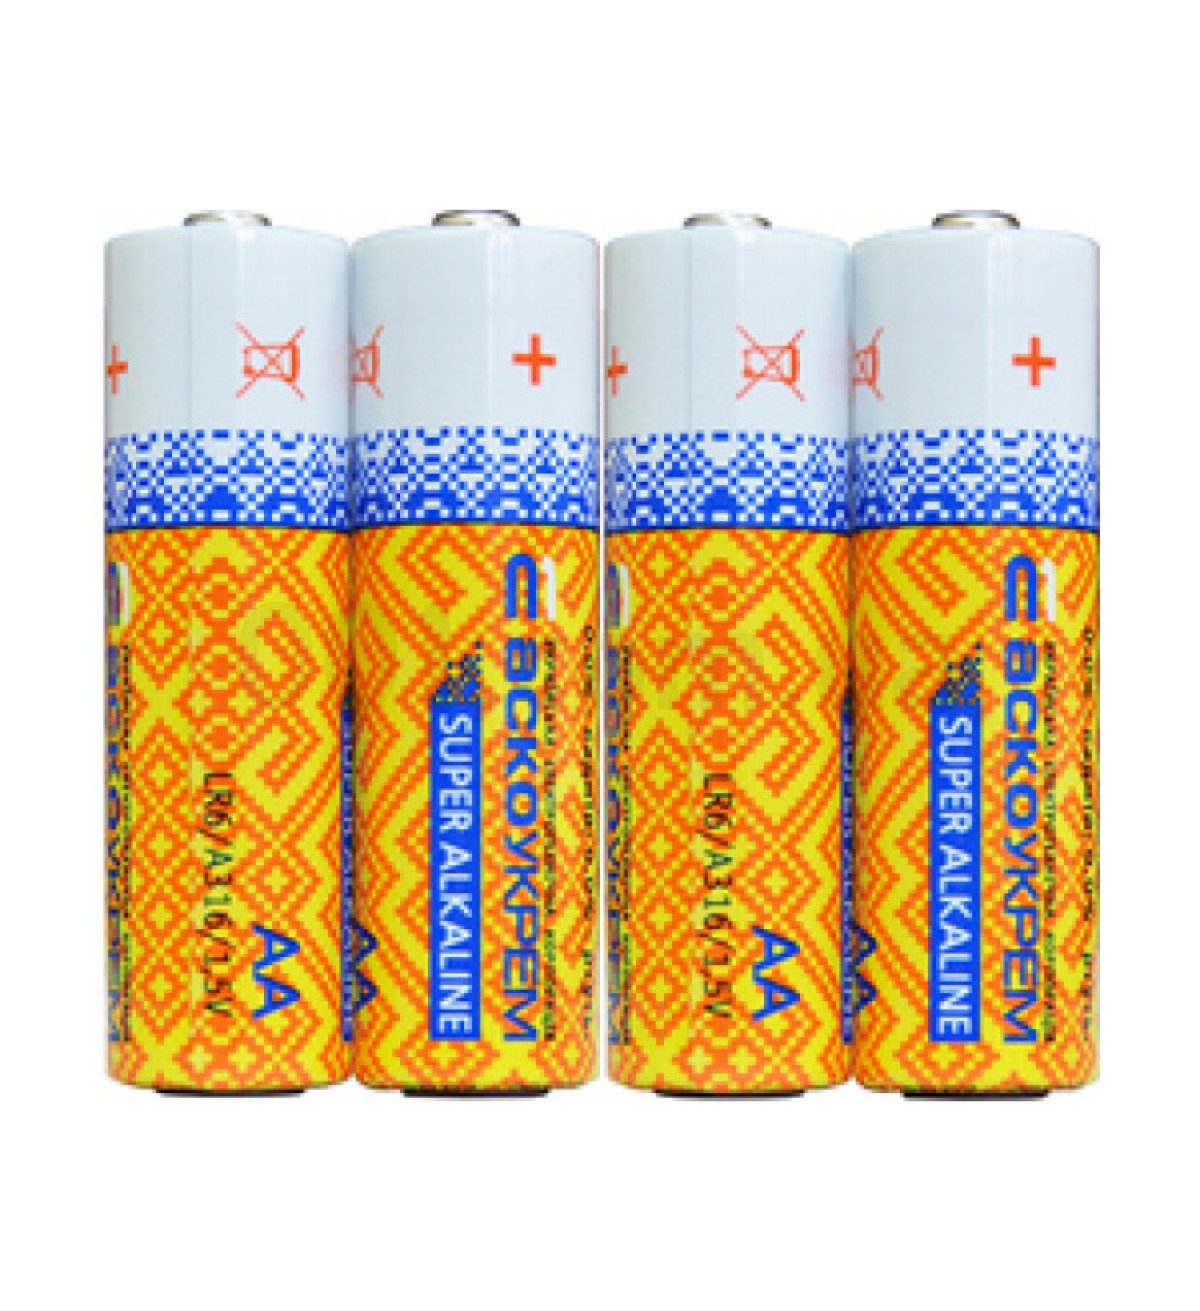 Батарейка щелочная AА.LR6.SP4, типоразмер AA упаковка shrink 4 шт., АСКО-УКРЕМ 256_280.jpg